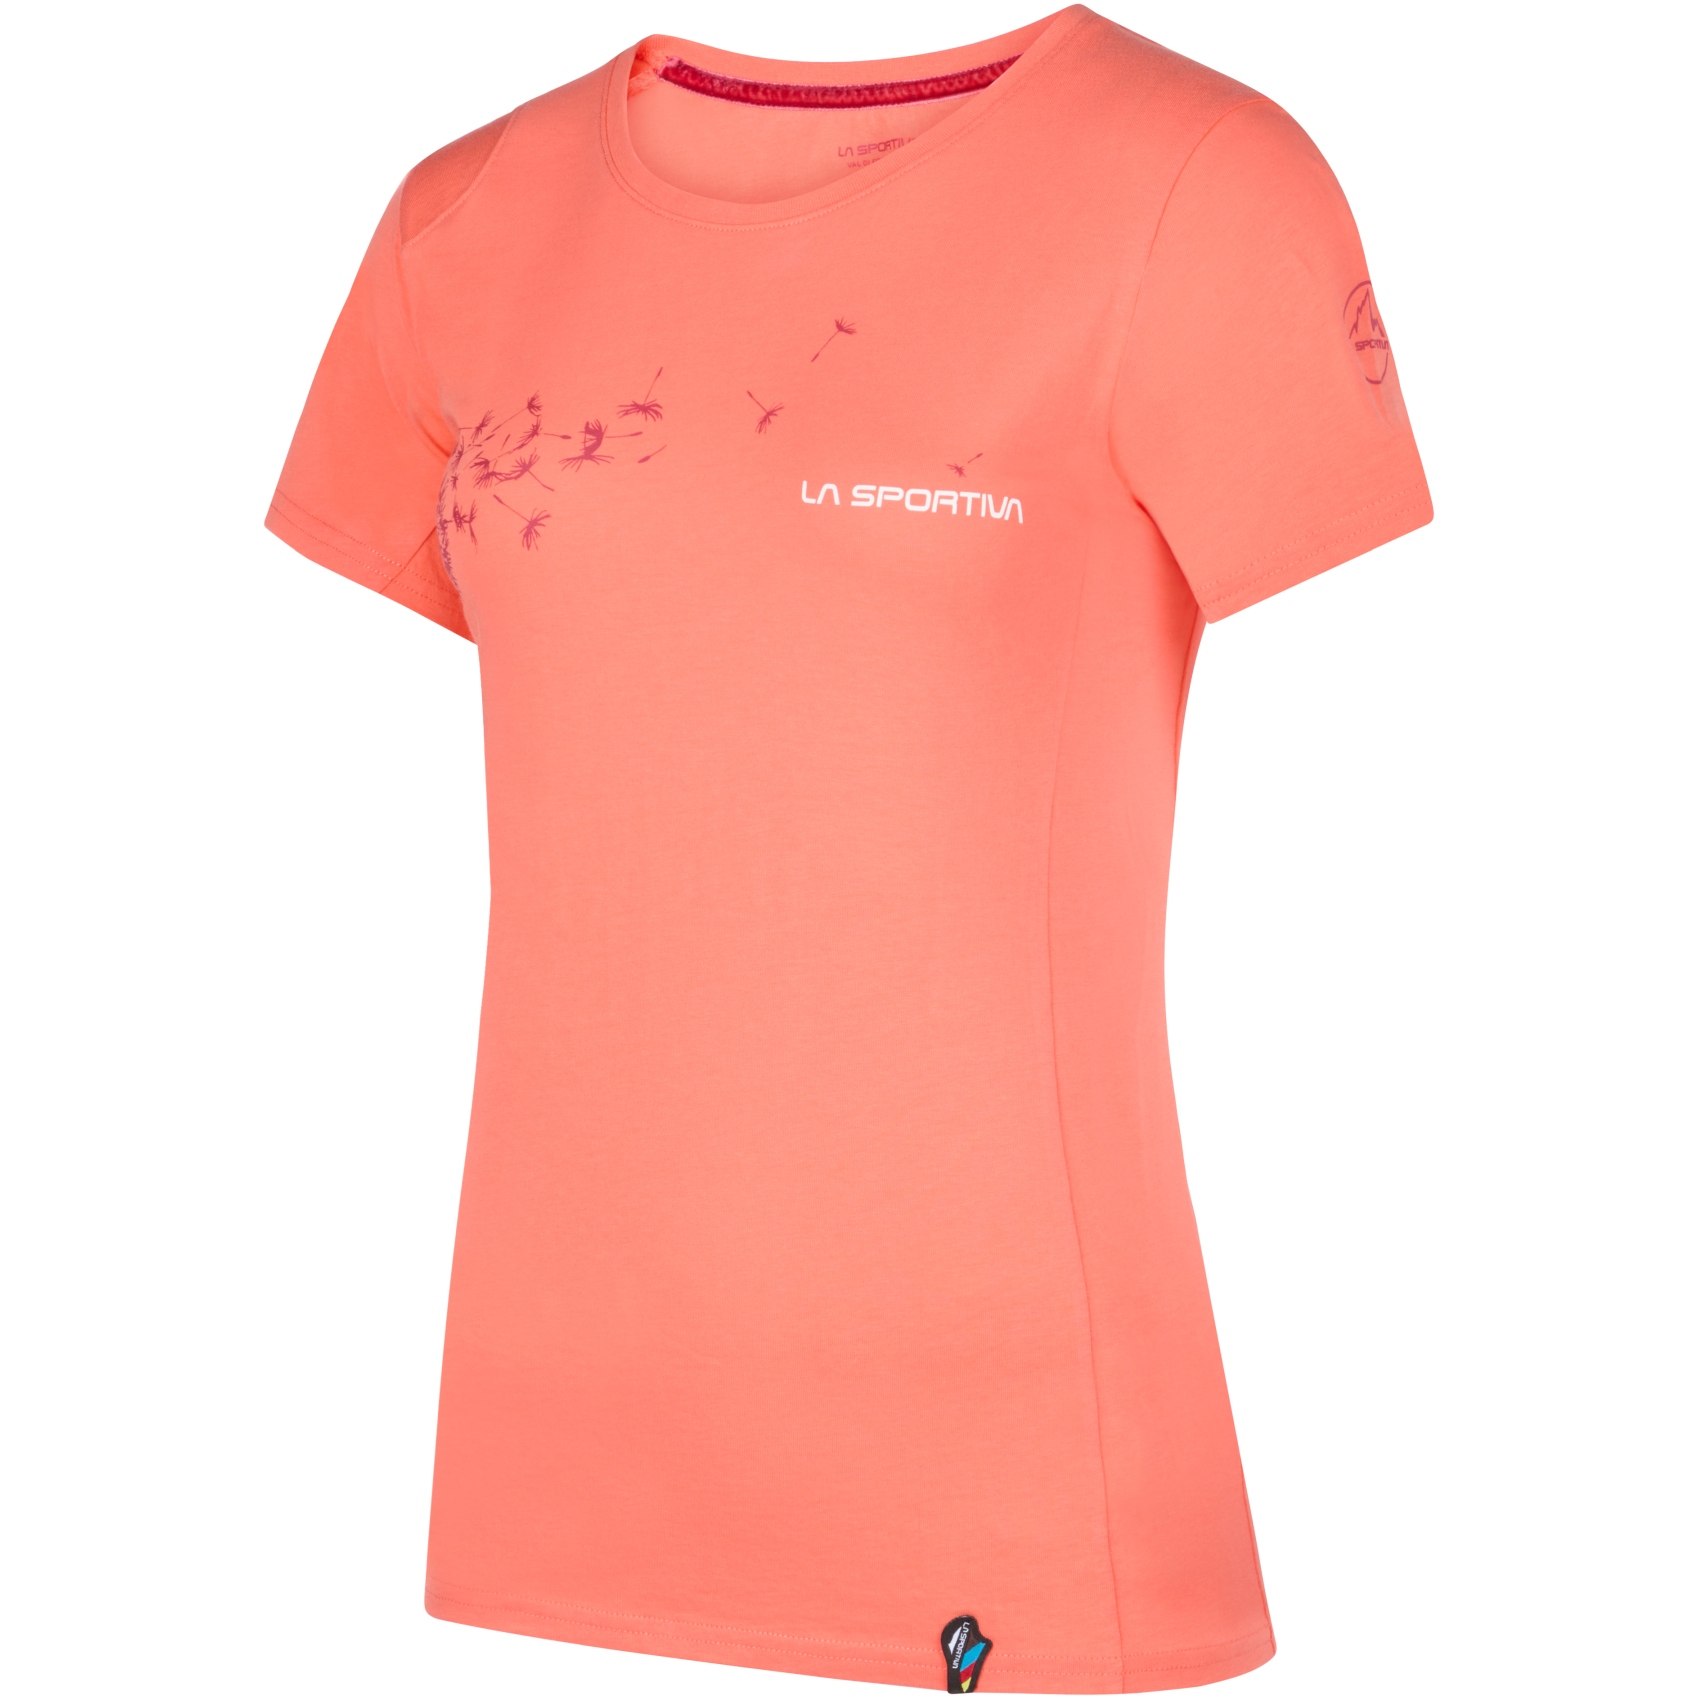 Bild von La Sportiva Windy T-Shirt Damen - Flamingo/Velvet